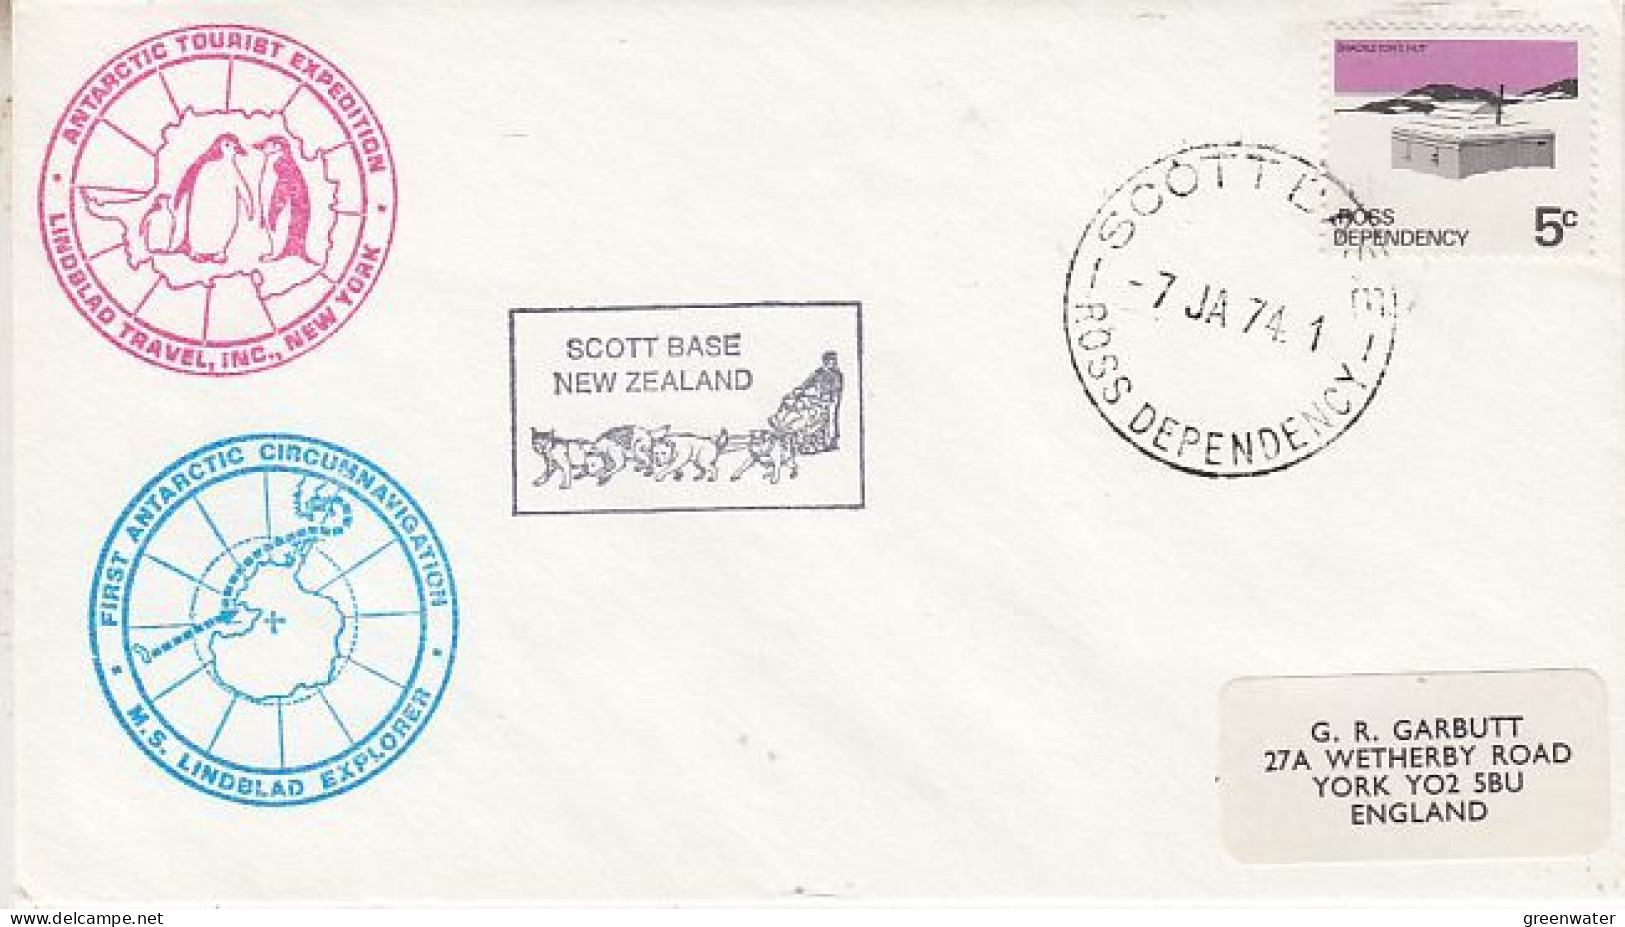 Ross Dependency Lindblad Travel 1st Antarctic Circummavigation Ca Scott Base 7 JA 1974 (RT224) - Covers & Documents